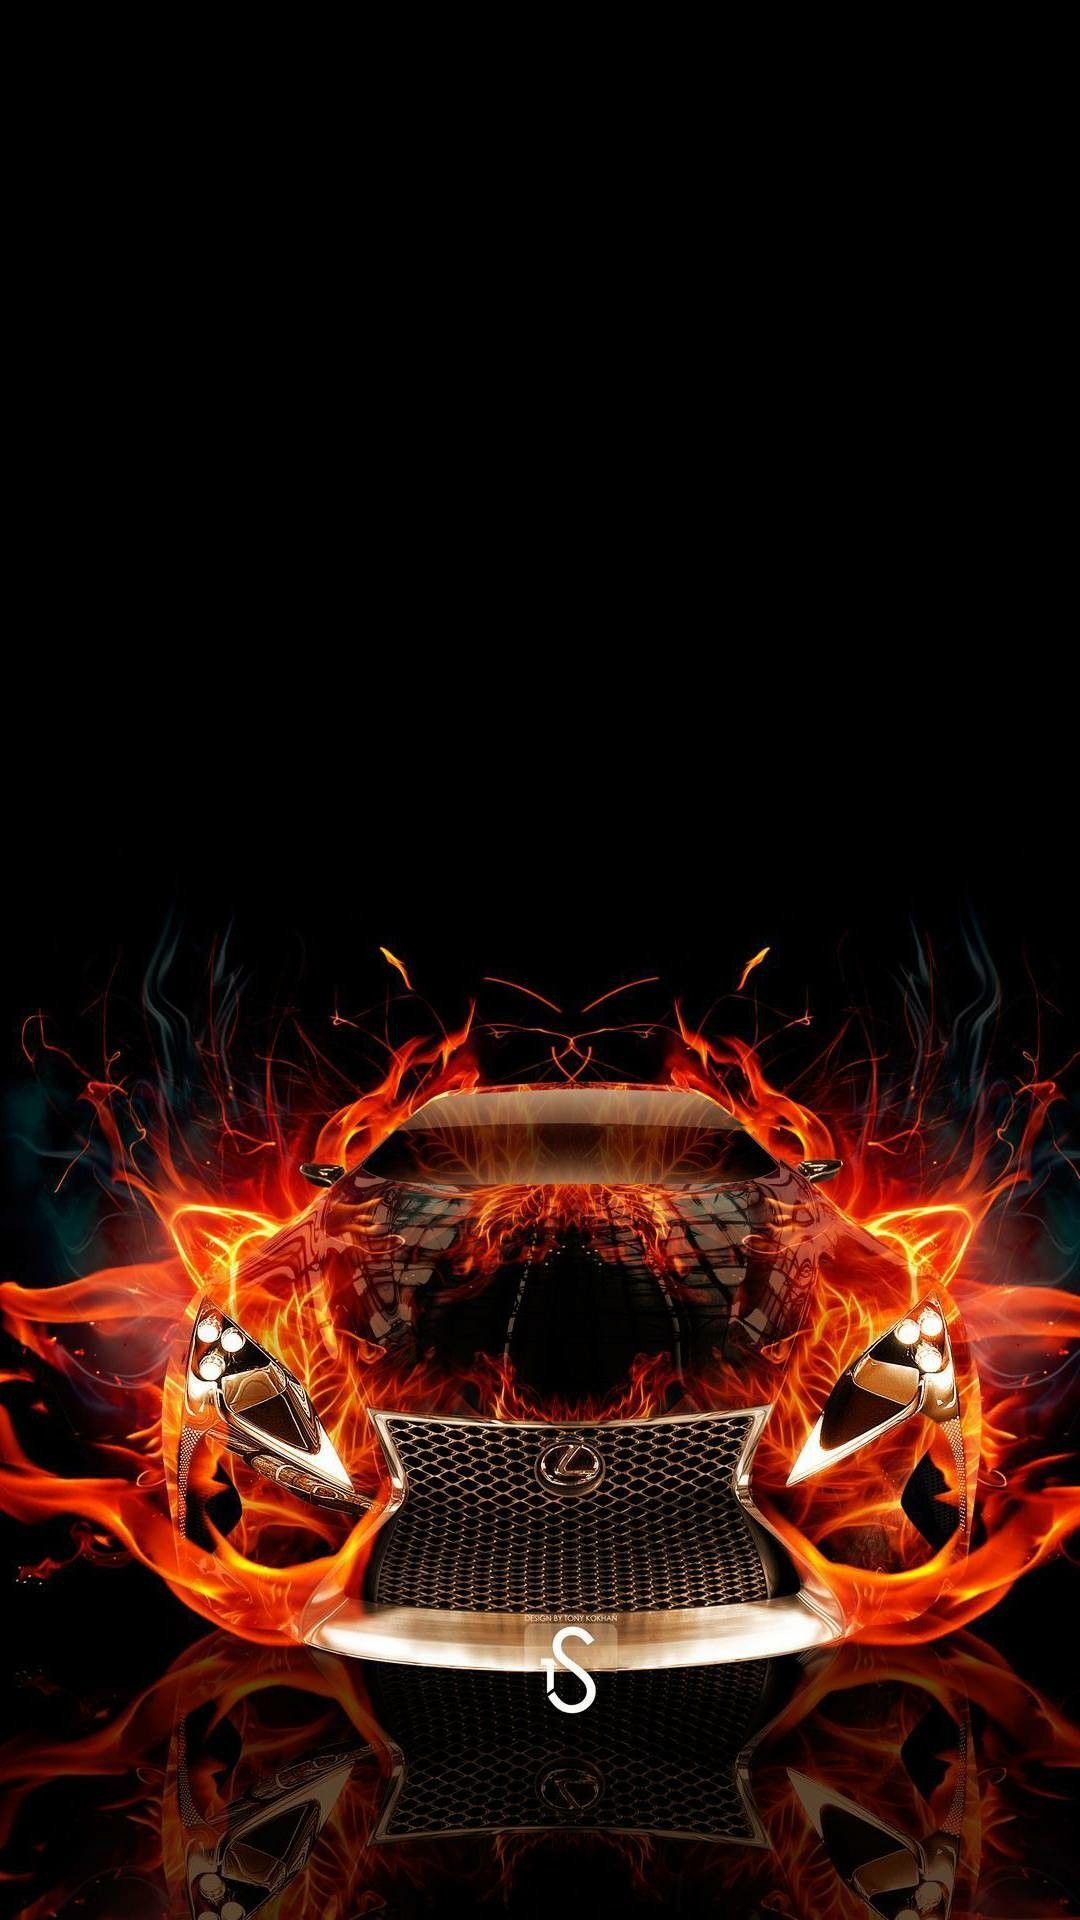 Fire car. Car wallpaper, Sports cars luxury, Amazing cars